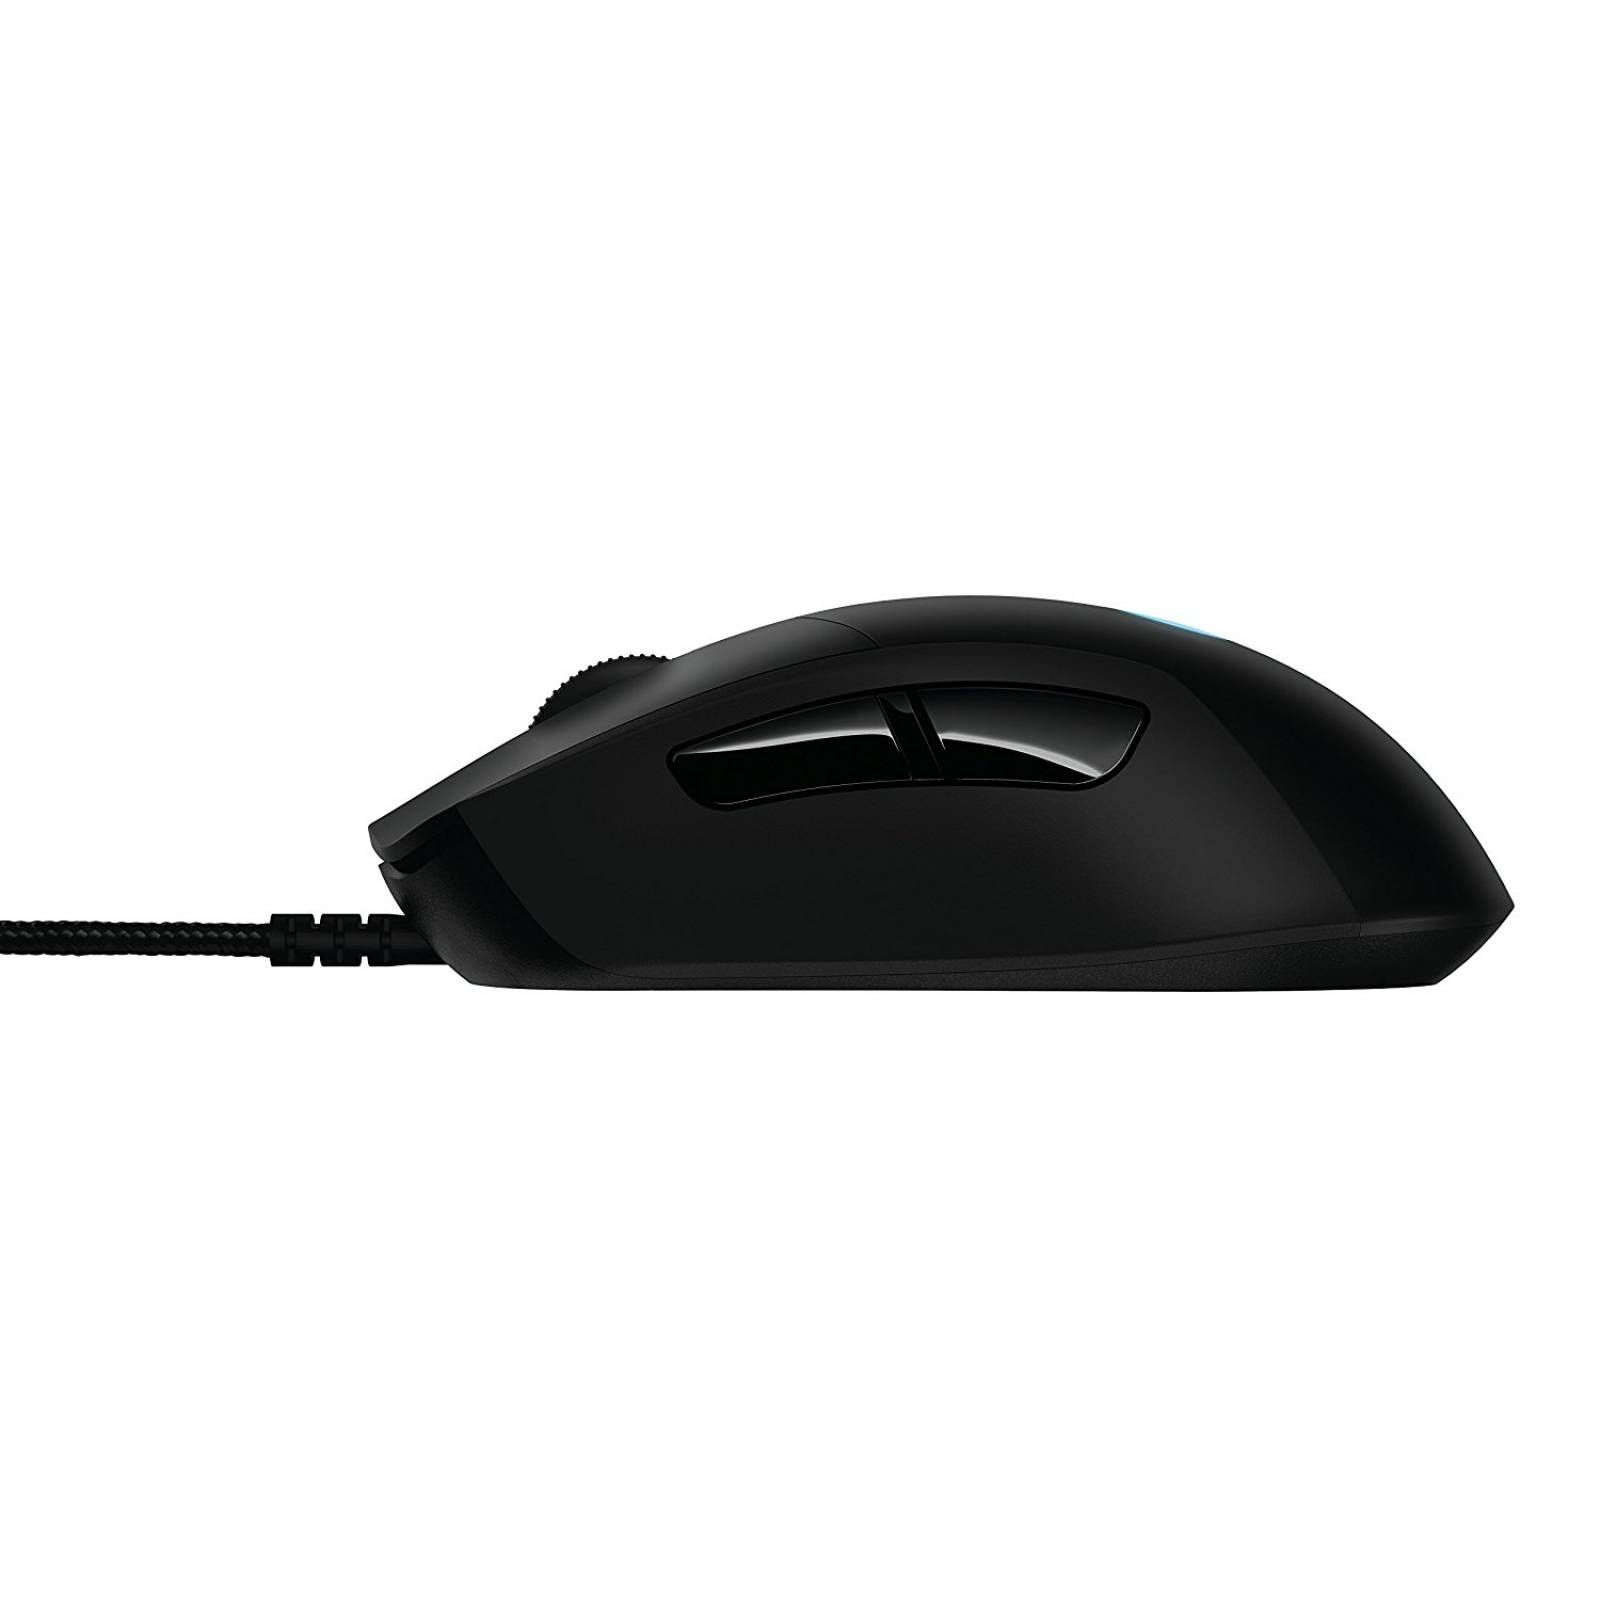 Mouse Gaming Logitech G403 Prodigy USB 12000 DPI Iluminación RGB Negro